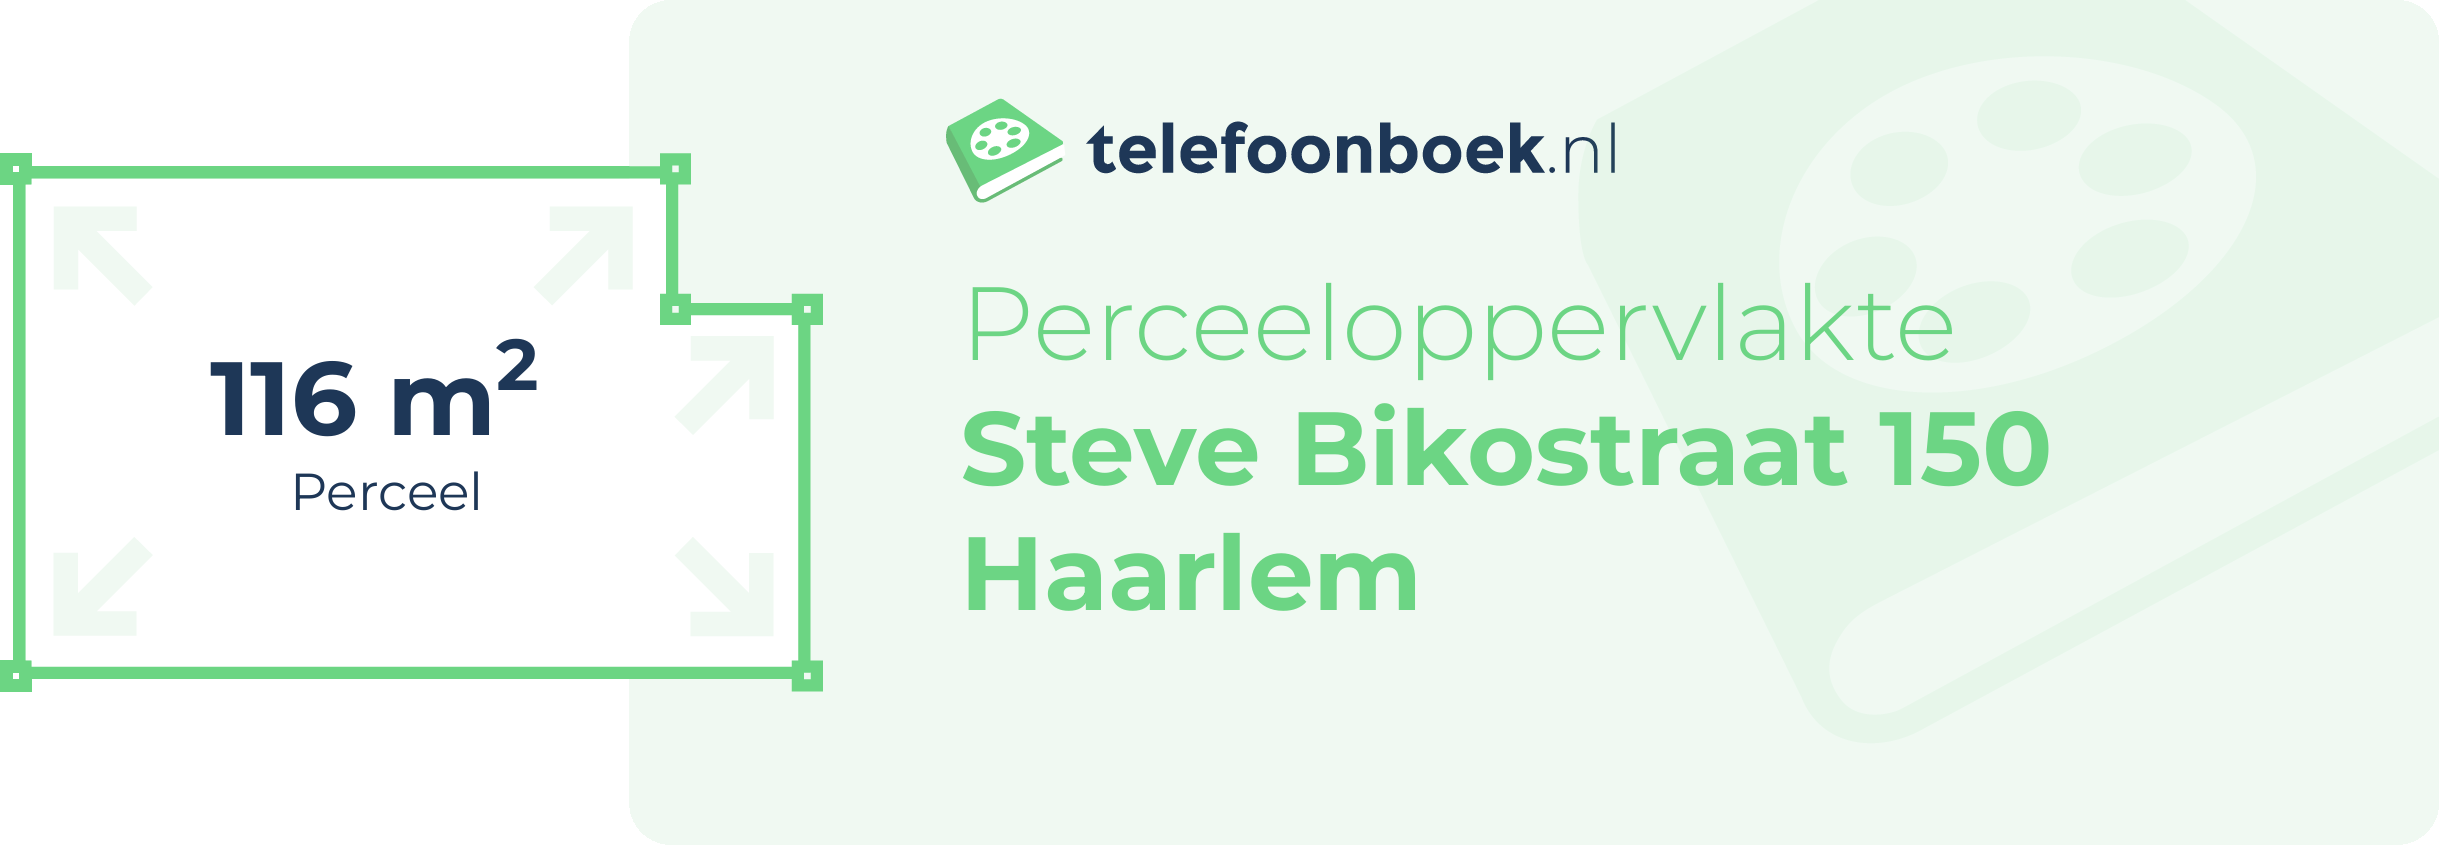 Perceeloppervlakte Steve Bikostraat 150 Haarlem